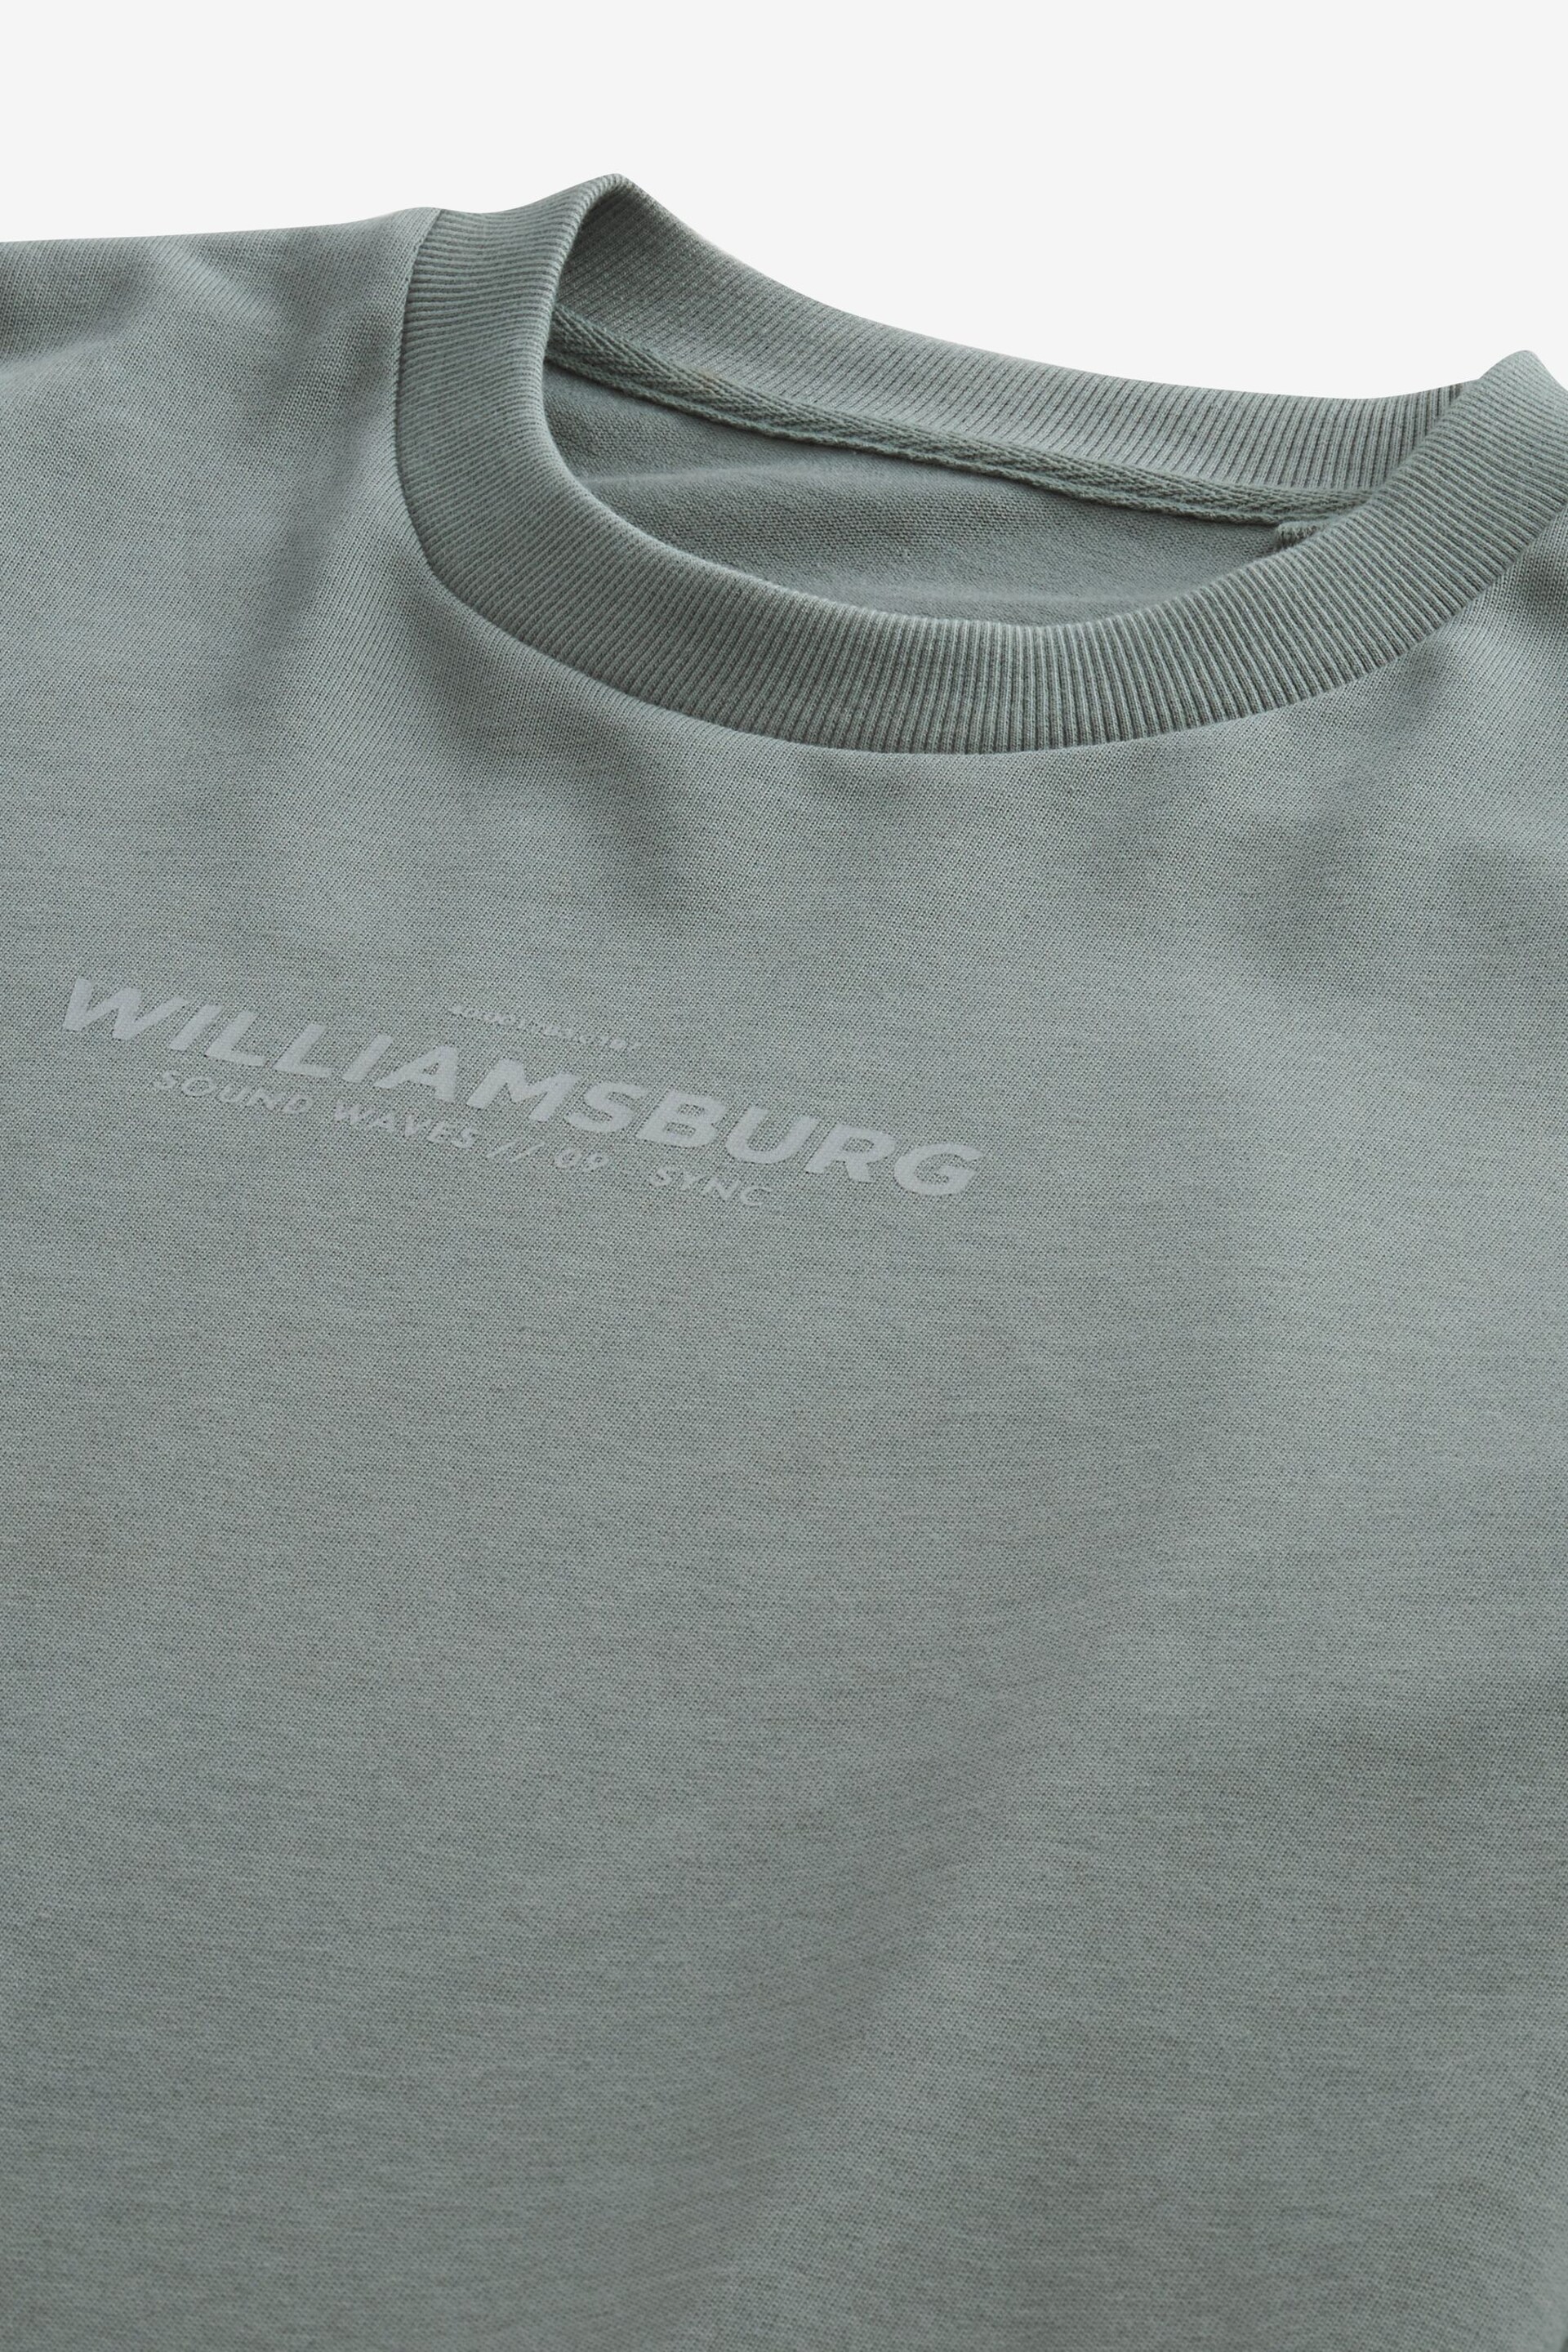 Grey Long Sleeve Williamsburg T-Shirt - Image 3 of 3